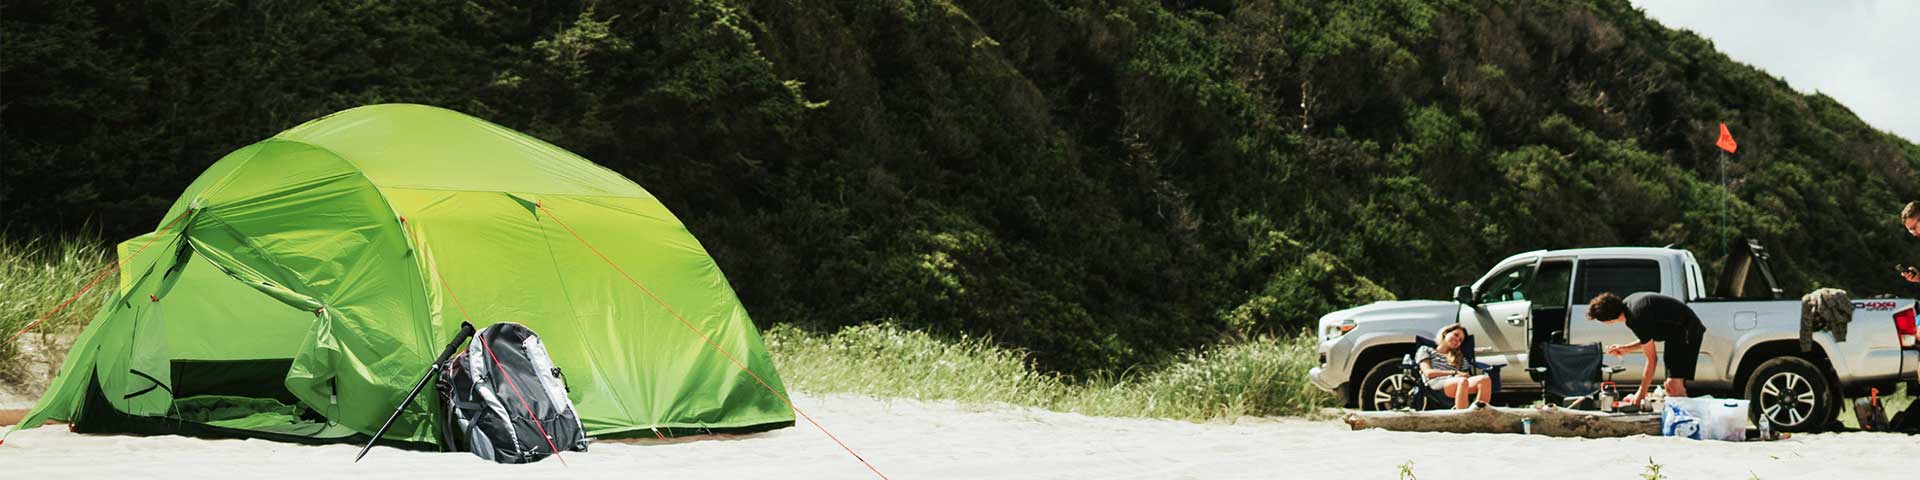 Slimerence Camping Leichtes Zelt, Mesh Camping Moskitonetz 1-2 Personen für  Trekking, Camping, Outdoor, Festival mit